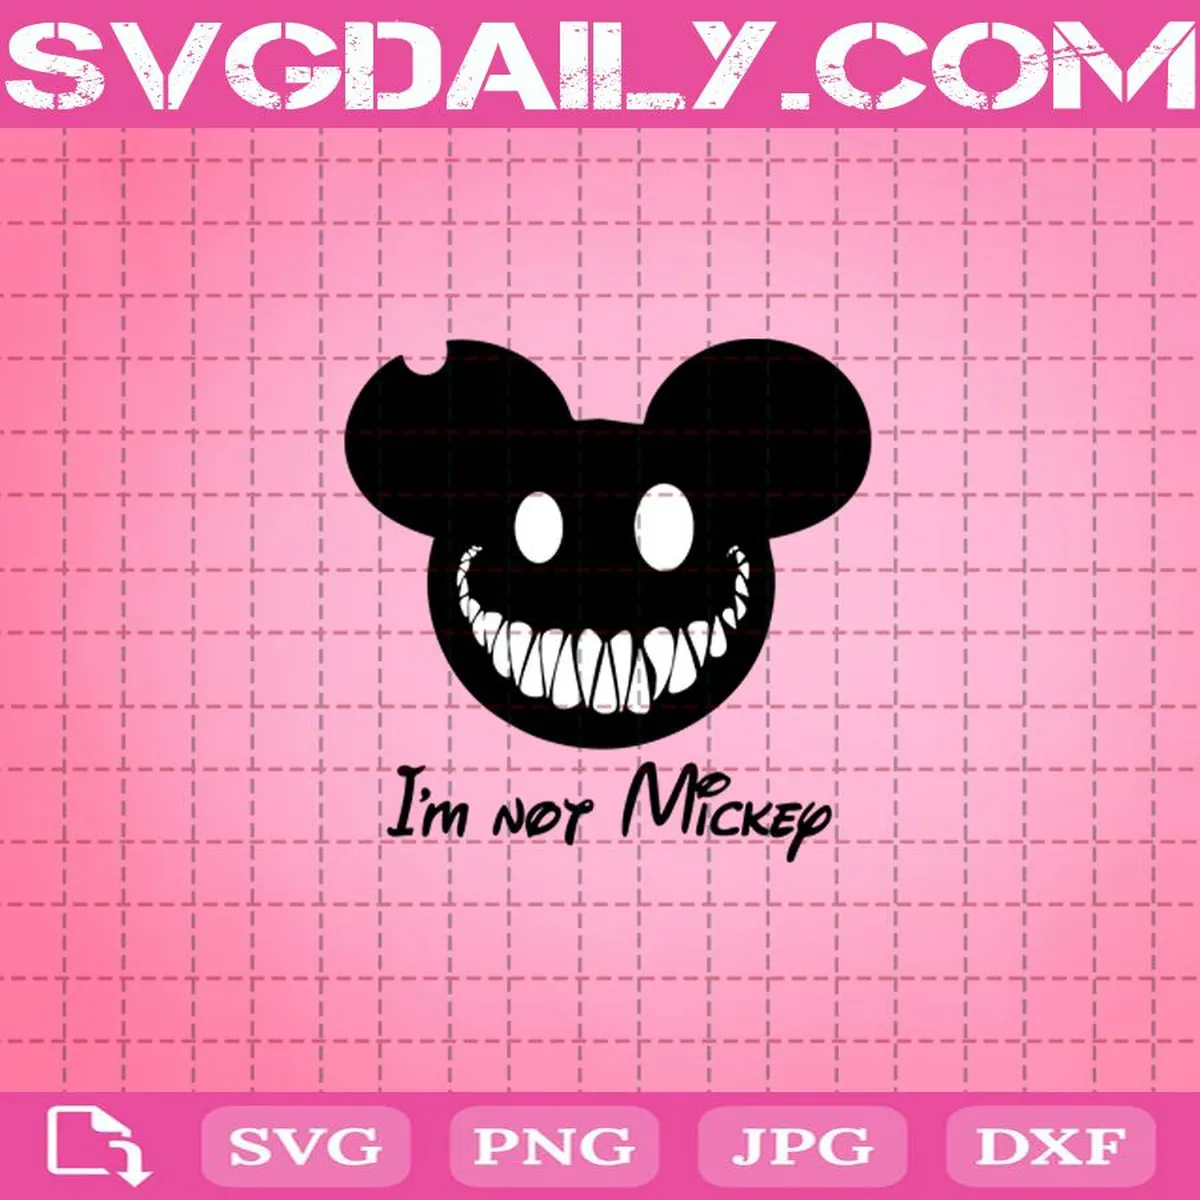 I’m Not Mickey Svg, Mickey Svg, Disney Svg, Creepy Mickey Svg, Svg Png Dxf Eps Cut File Instant Download